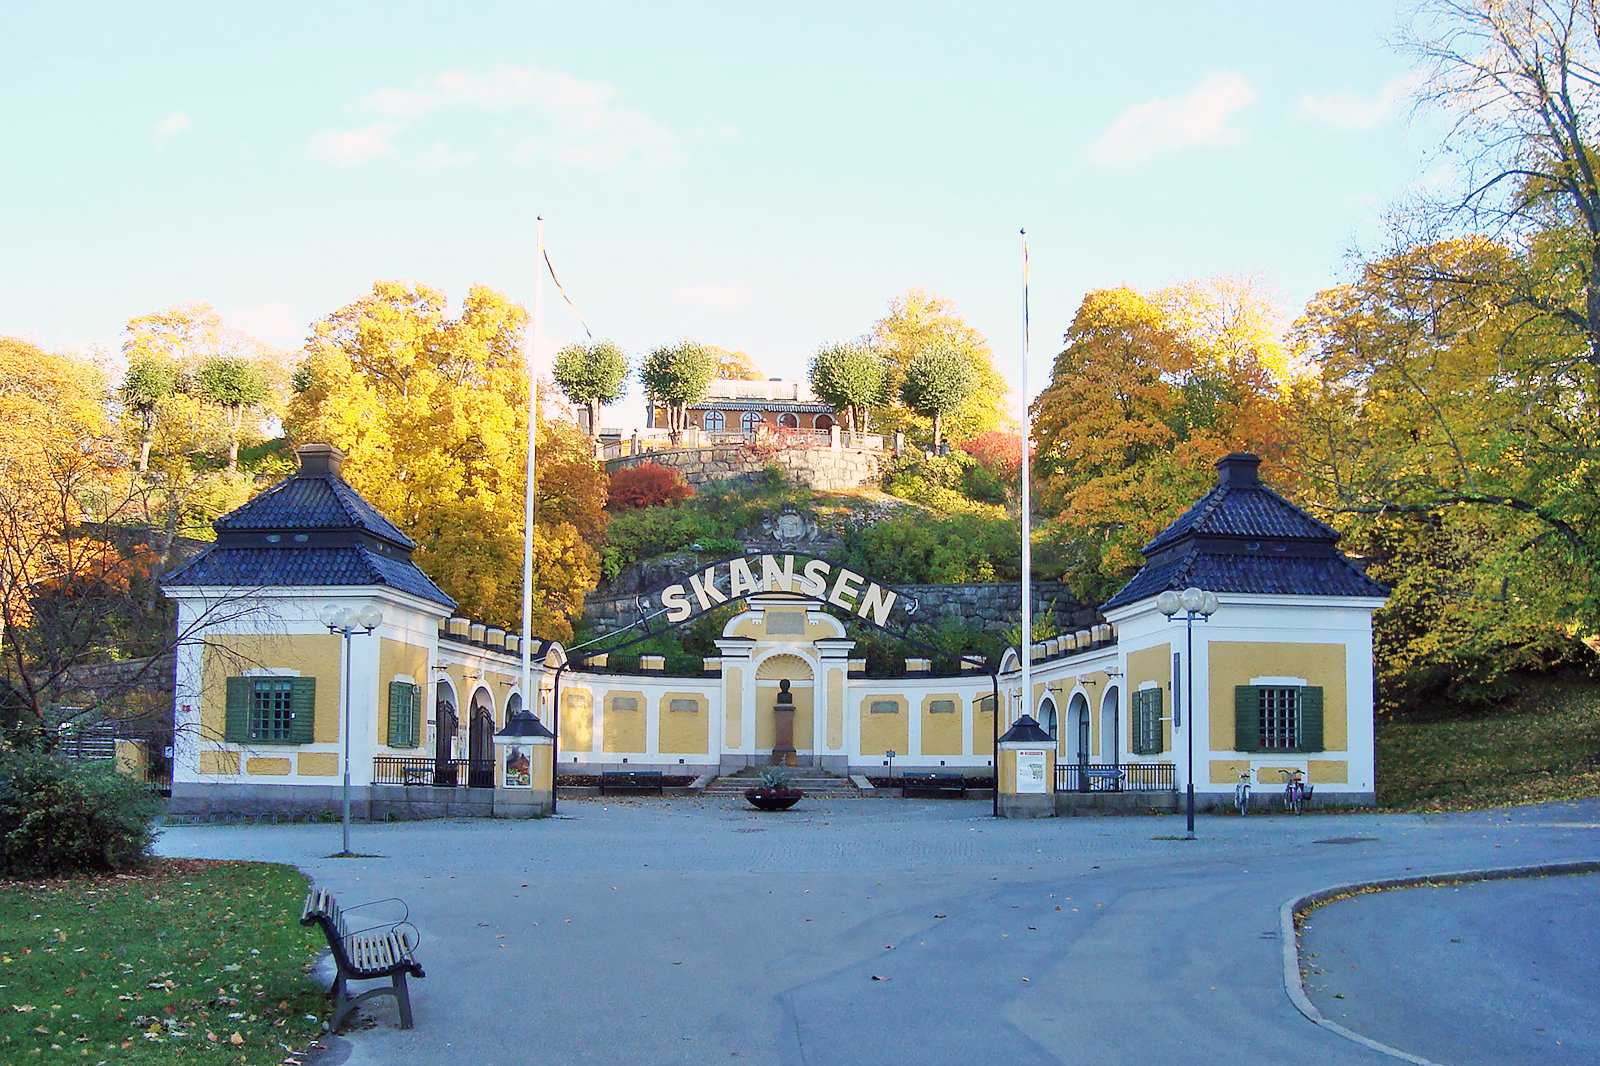 Le musée de plein air Skansen